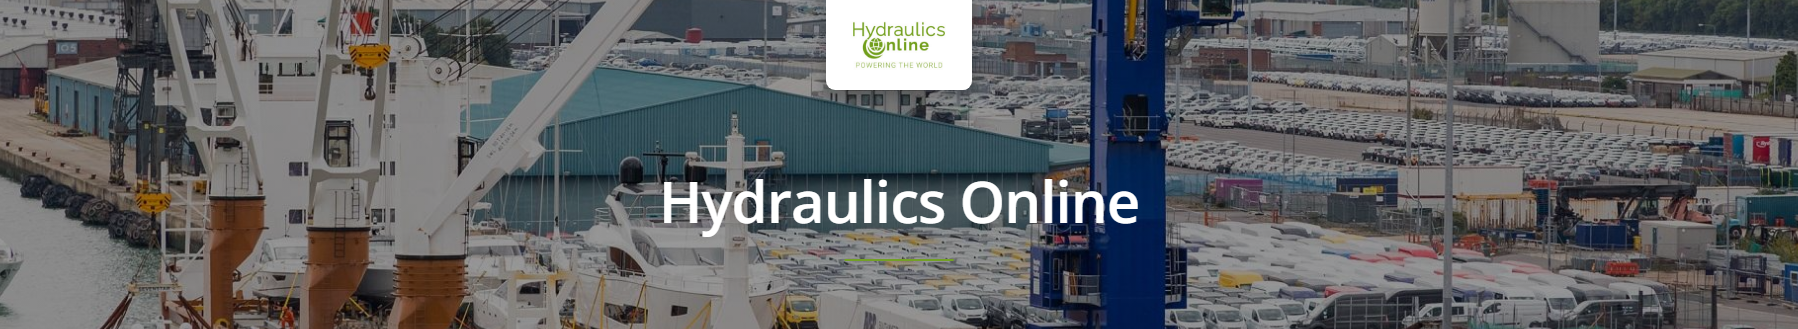 Hydraulics Online Pumps